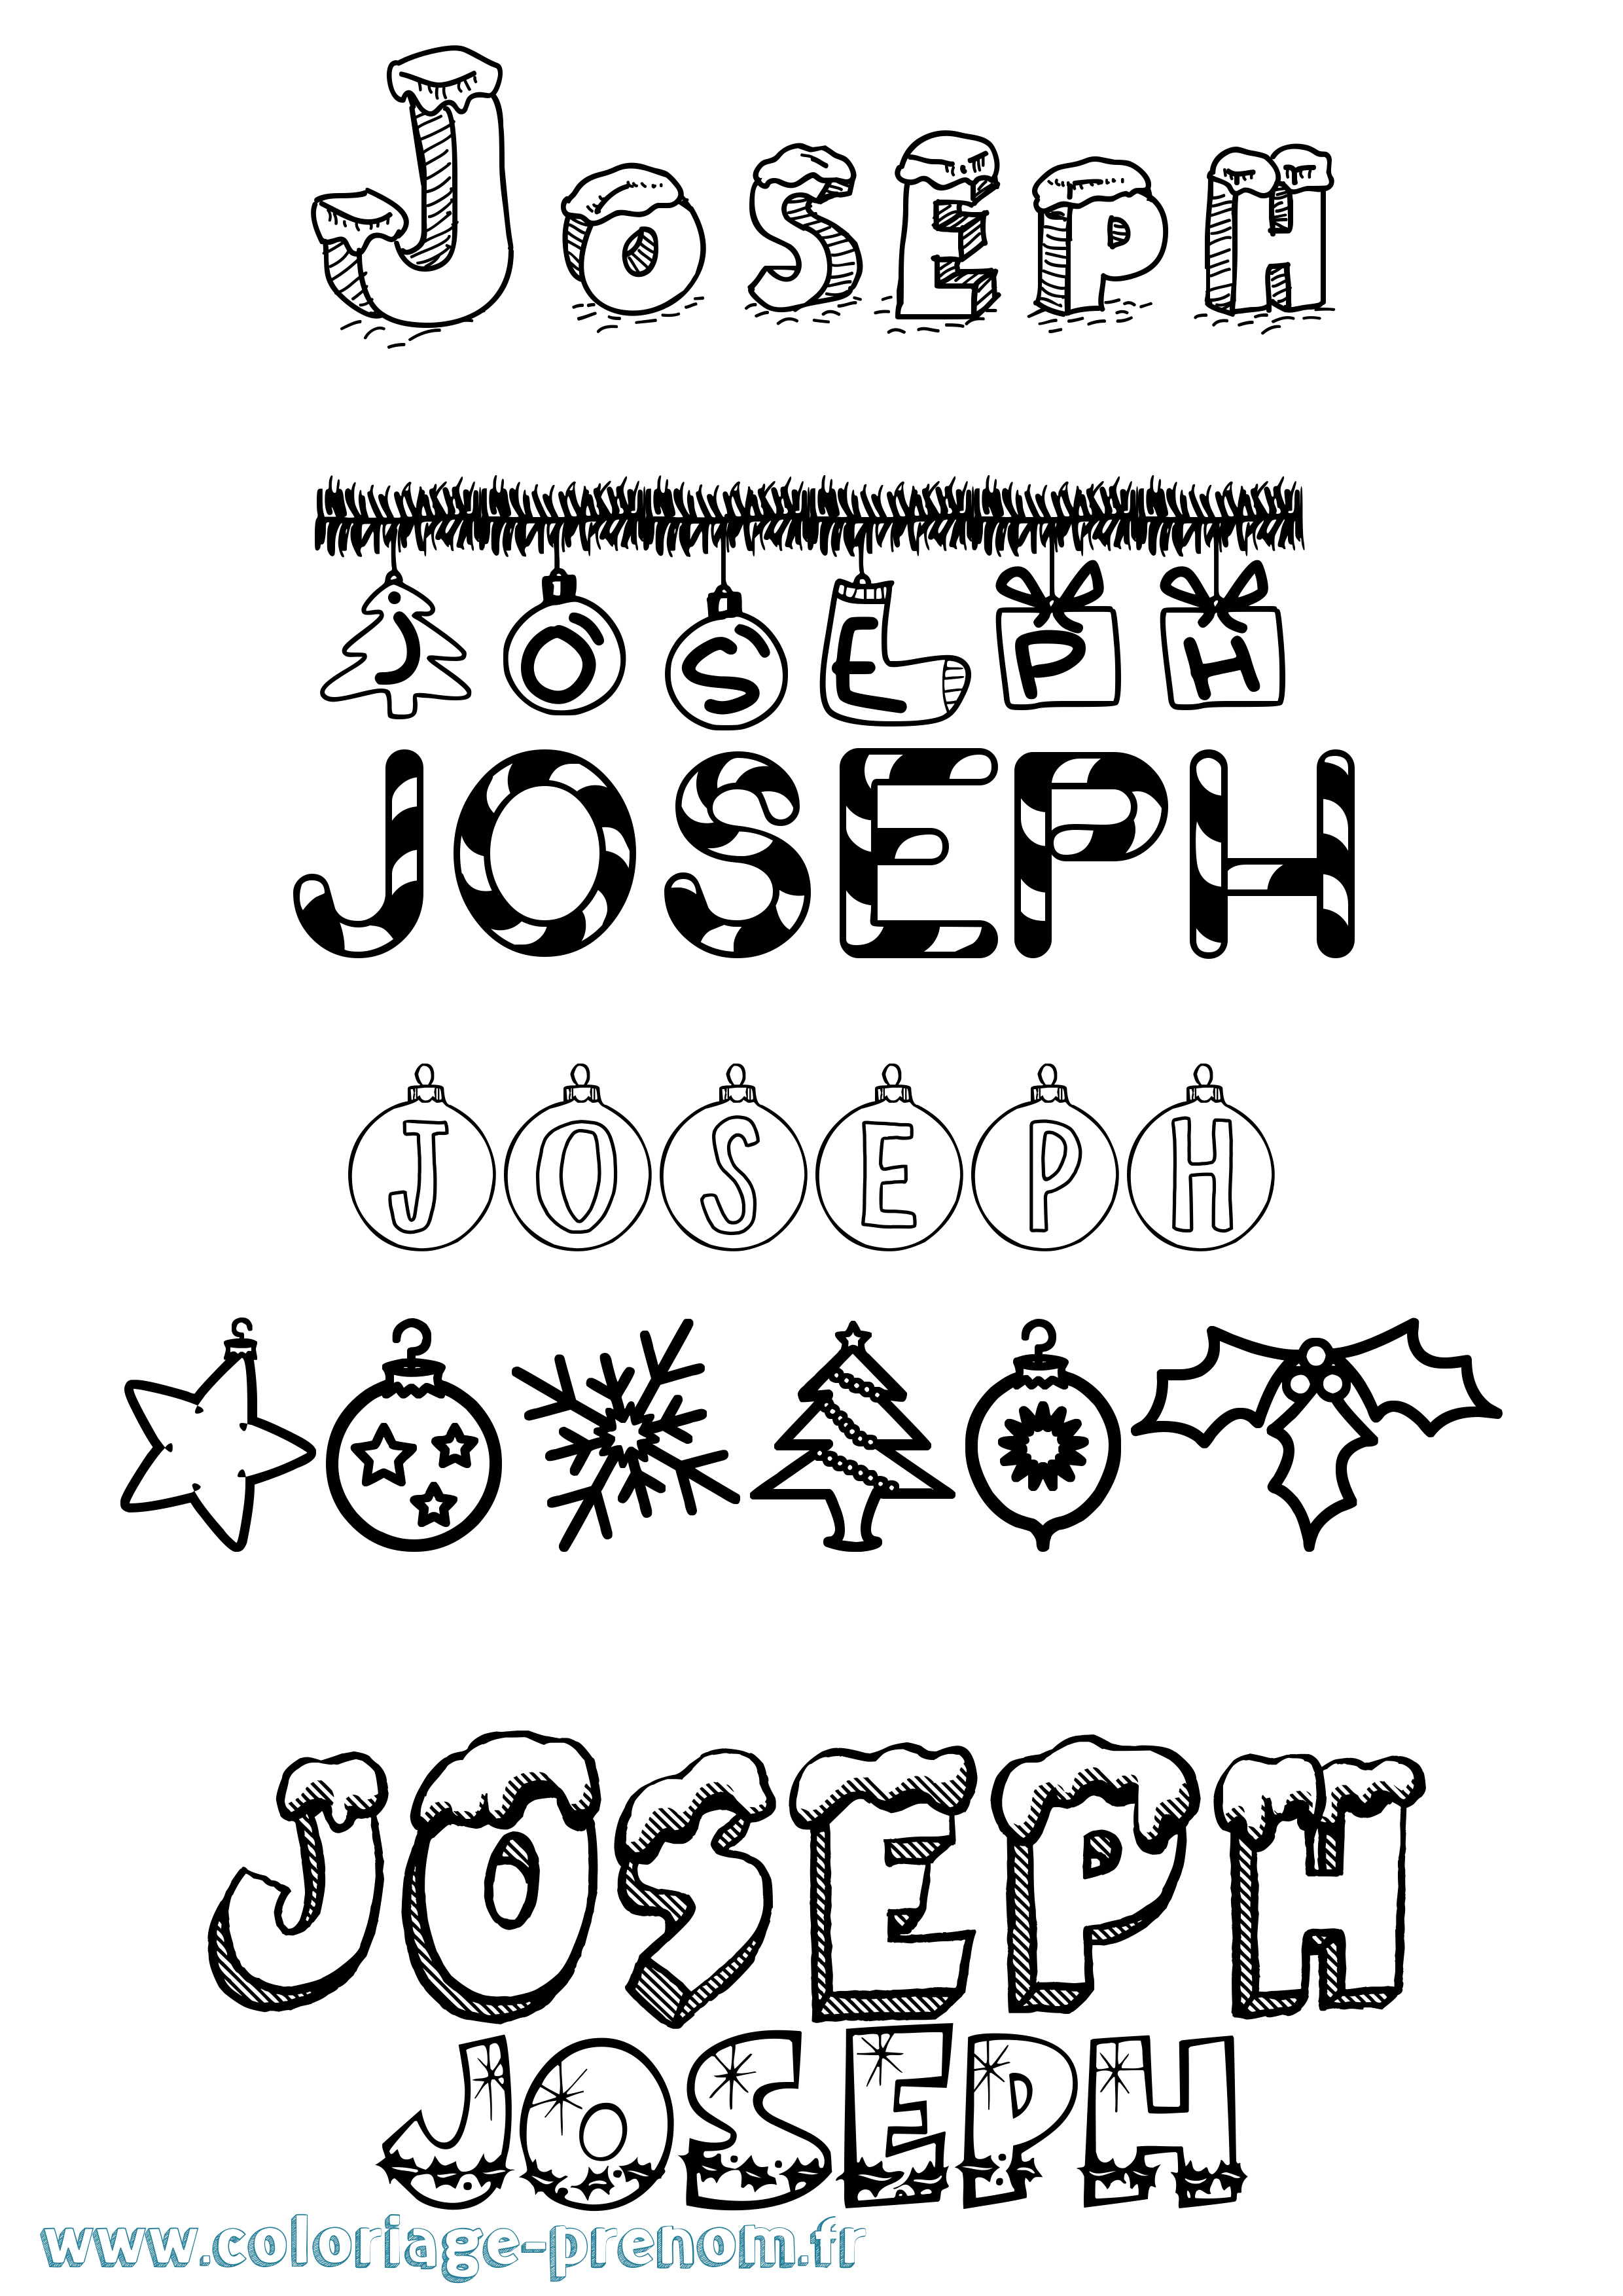 Coloriage prénom Joseph Noël